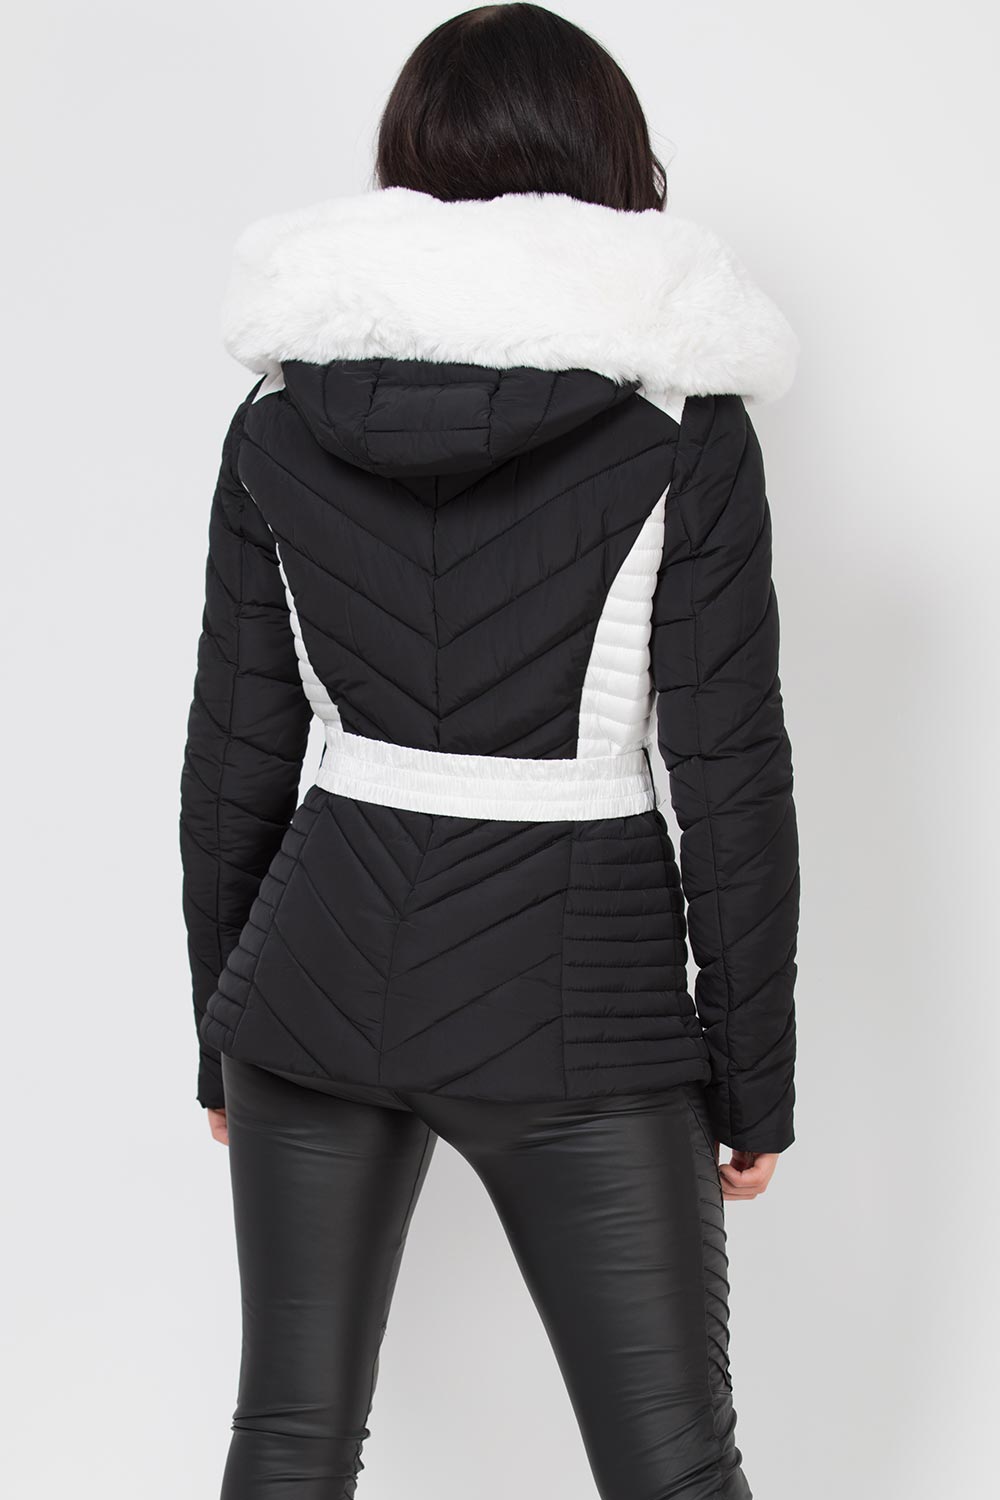 black puffer jacket with fur hood